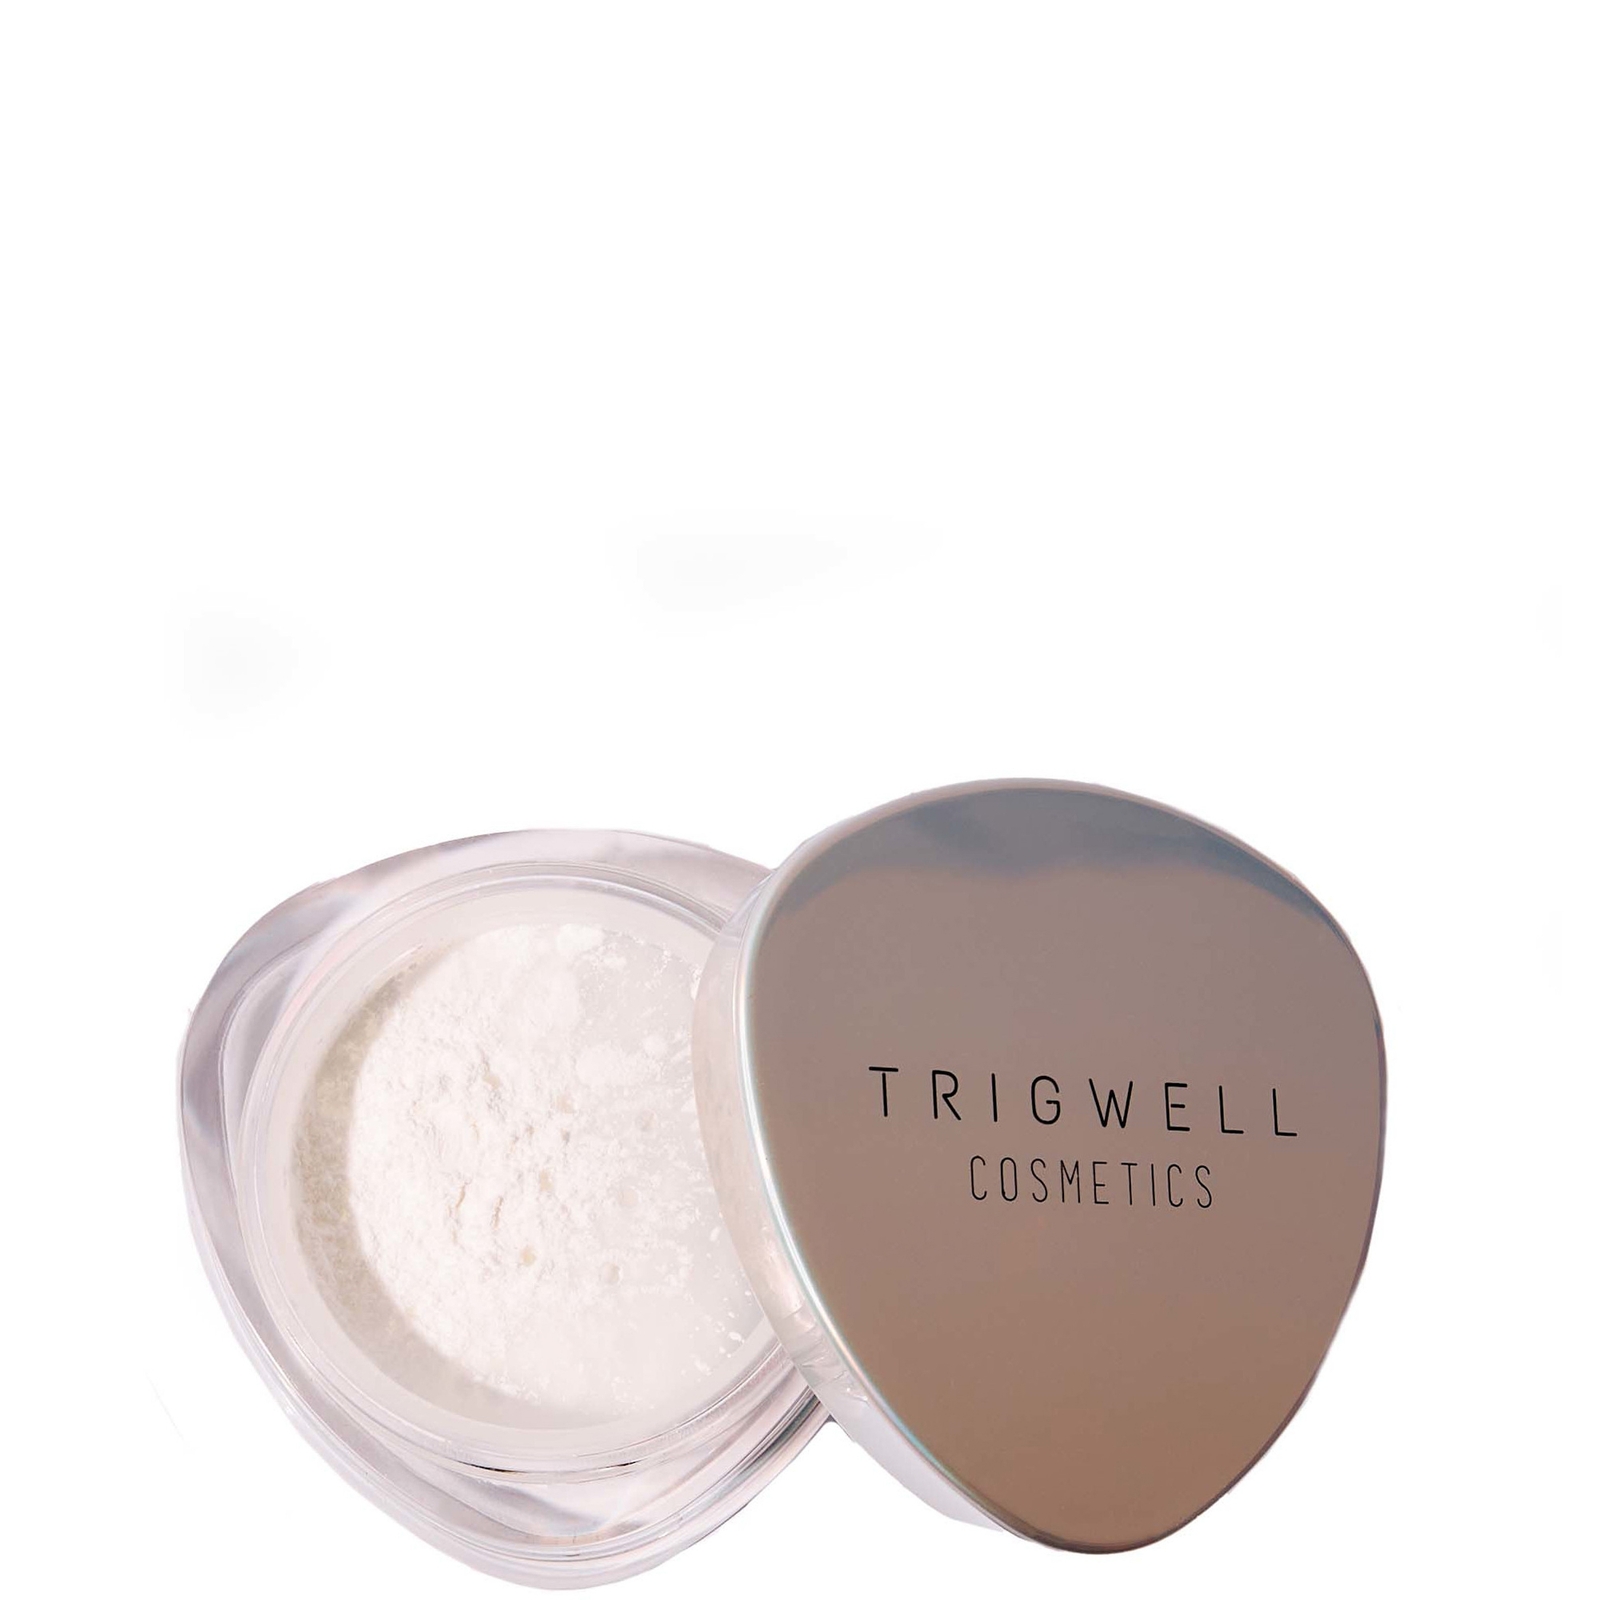 Image of Trigwell Cosmetics Velvet Setting Powder 8g (Various Shades) - Shade 0